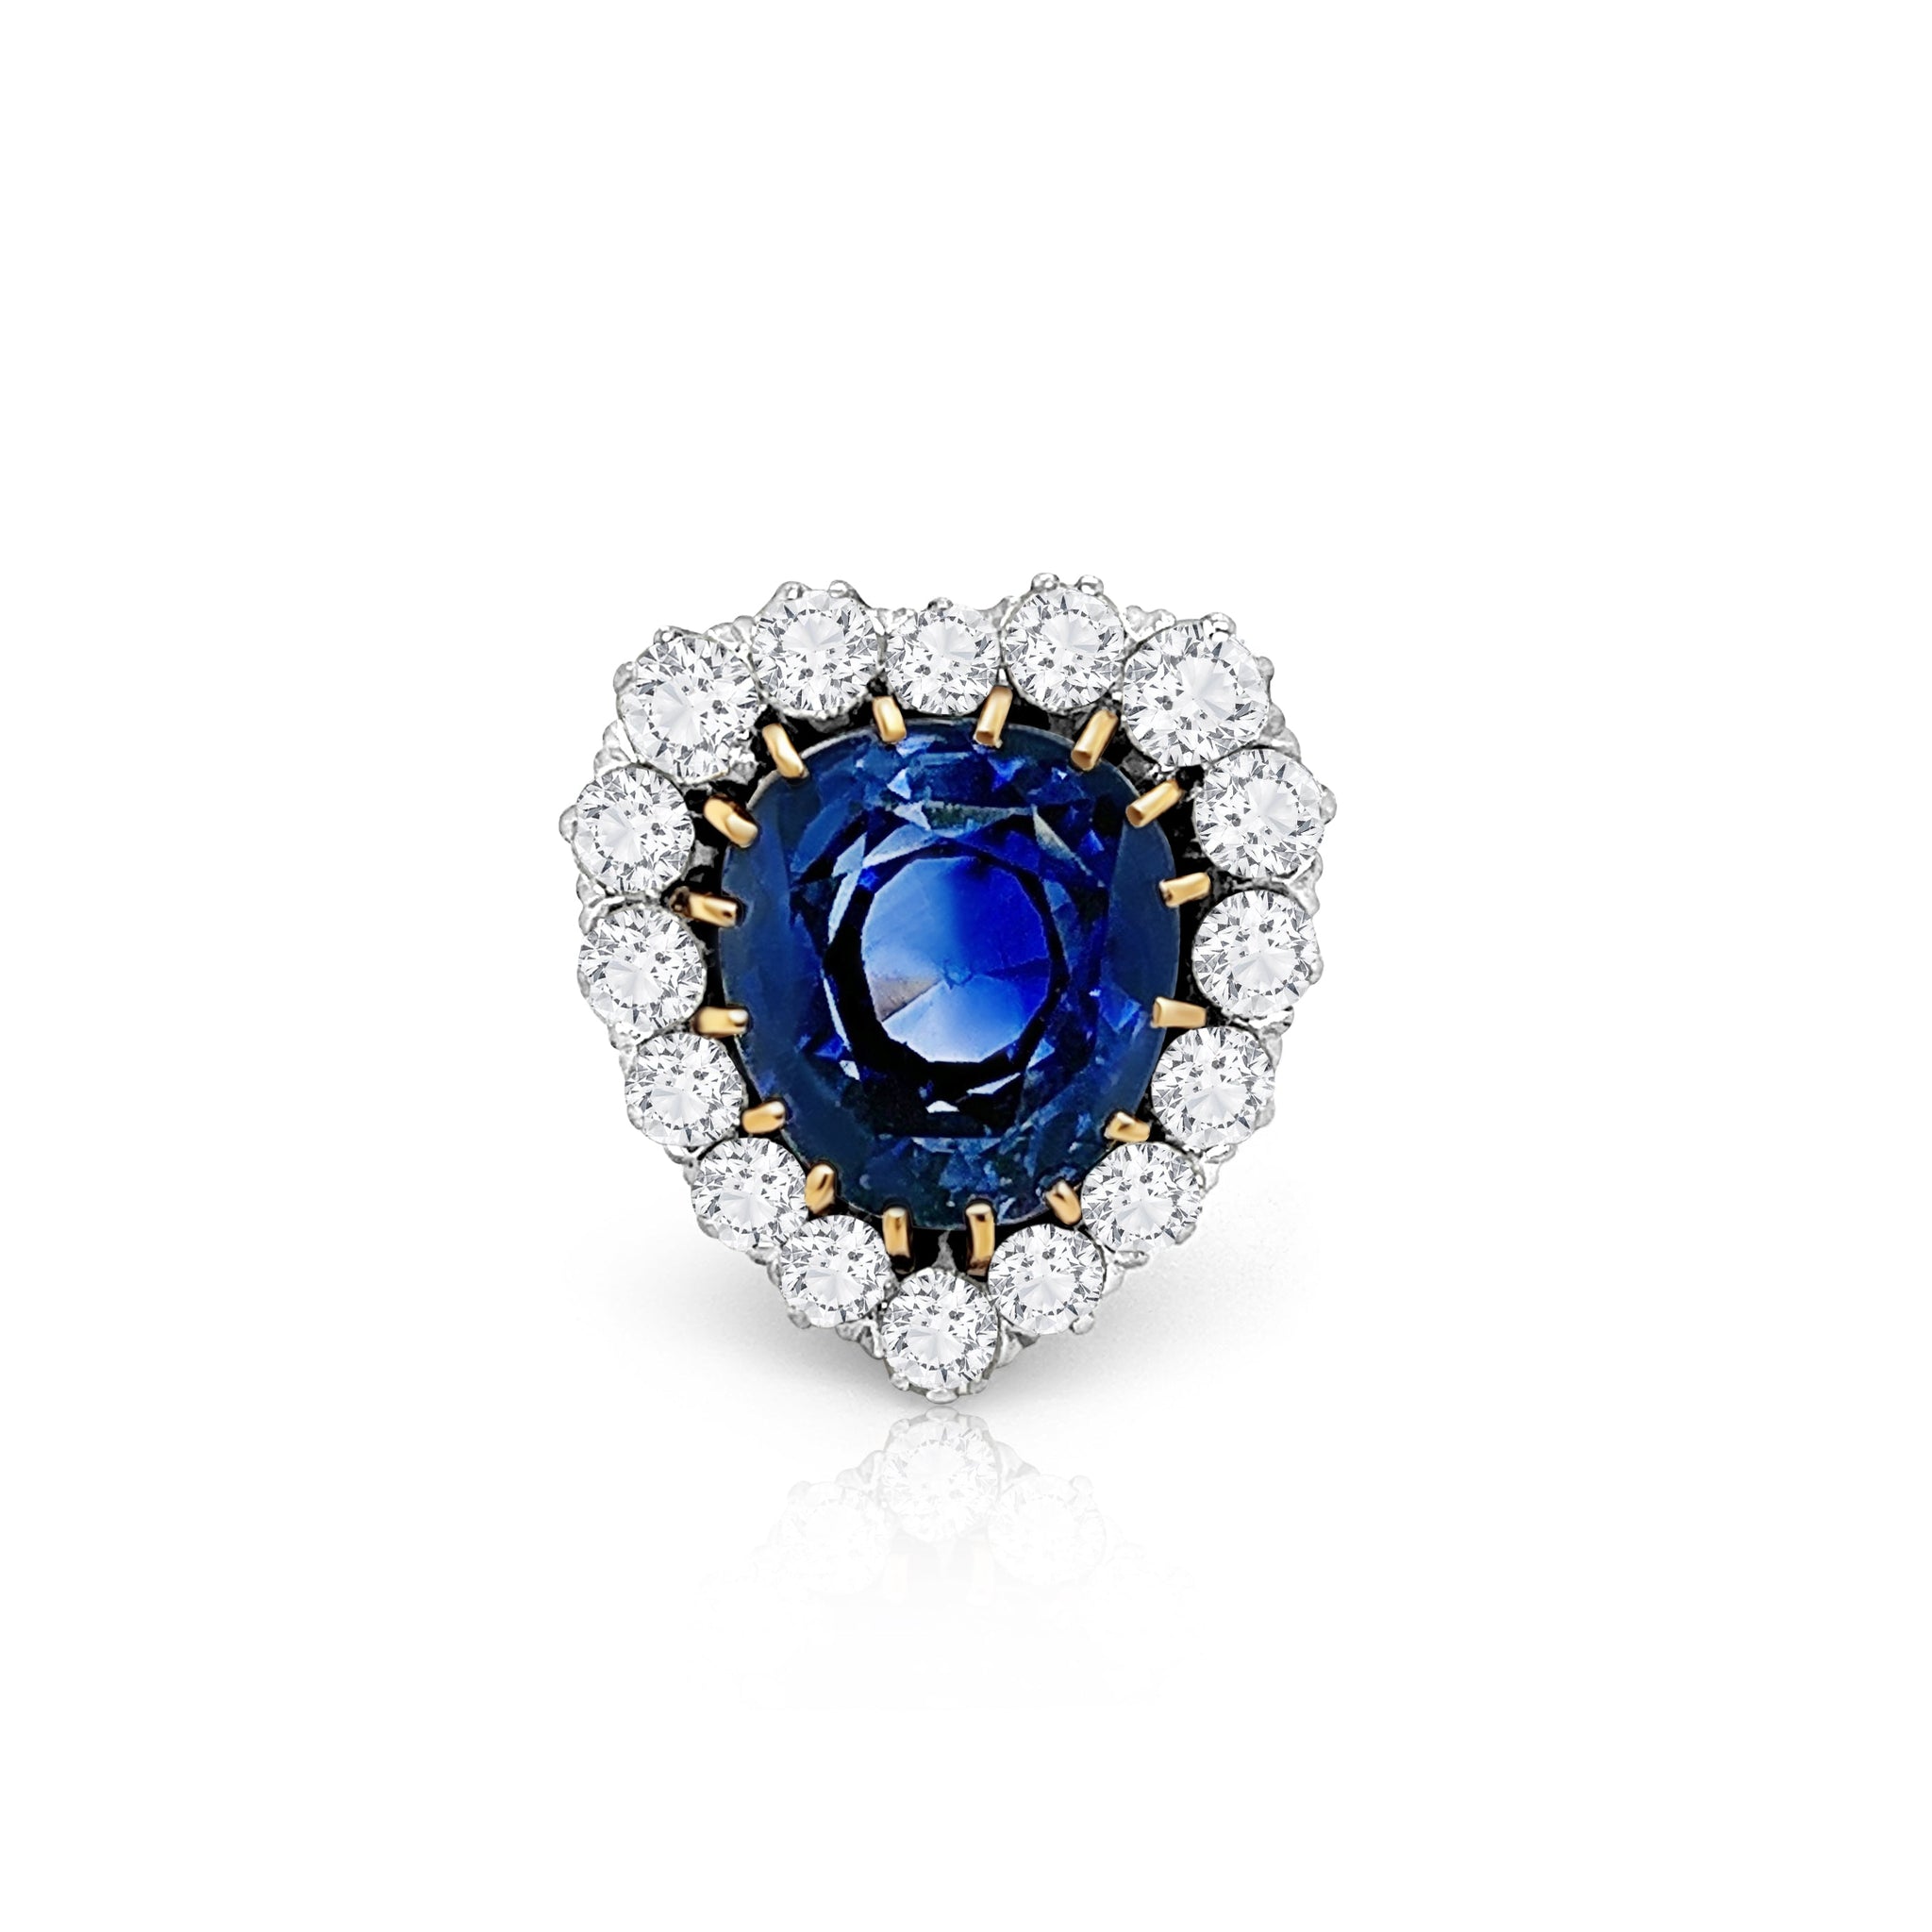 9 Carat No Heat Ceylon Blue Sapphire and Old Euro Cut Diamond Ring in 14K